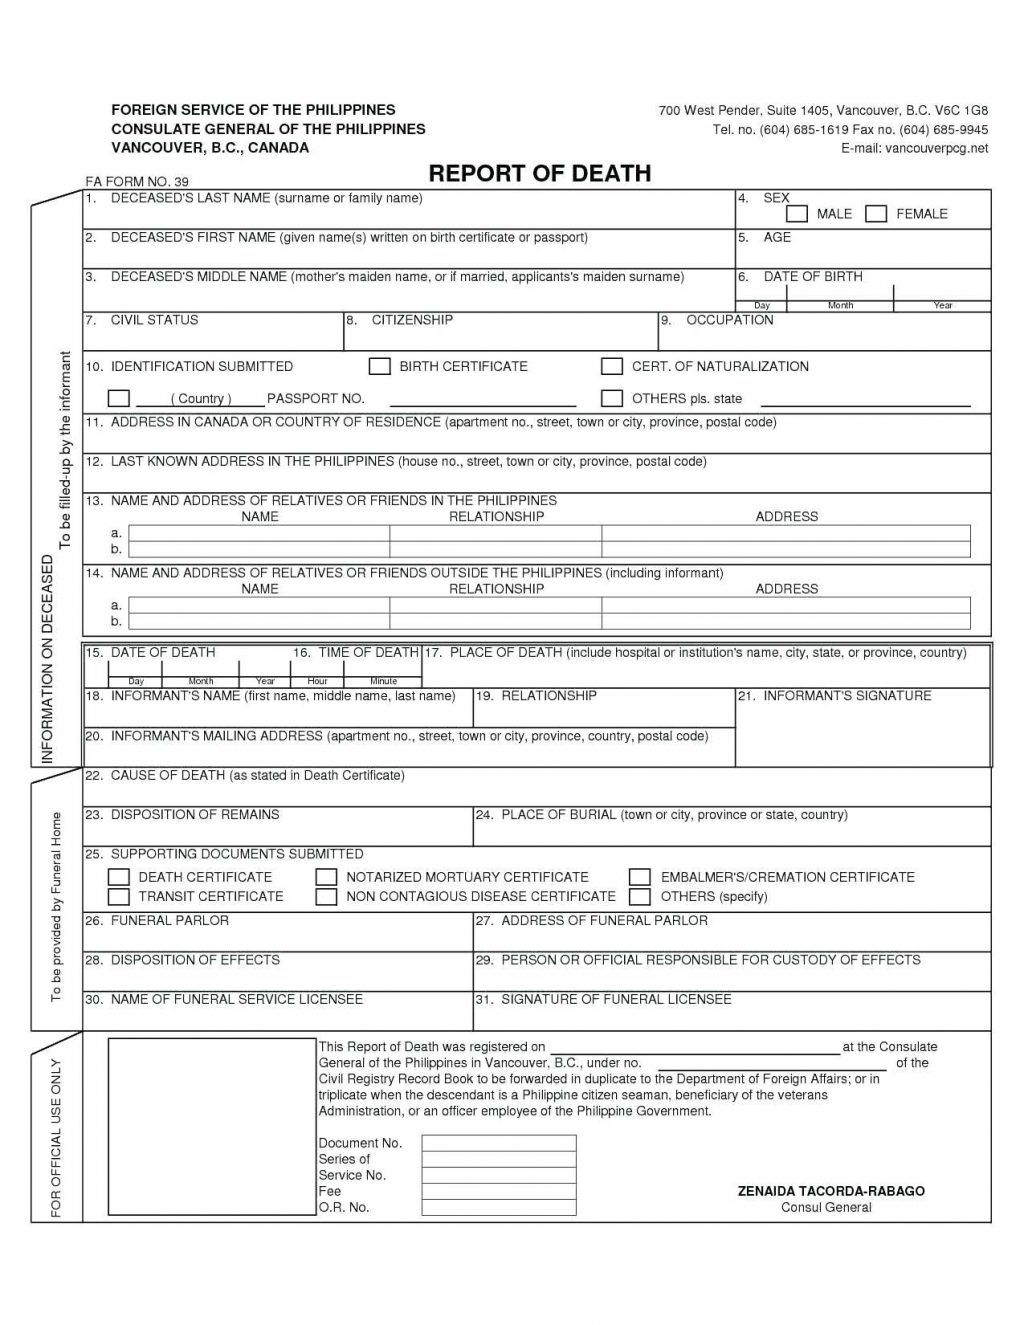 Death Certificate Translation Template Spanish To English Throughout Death Certificate Translation Template